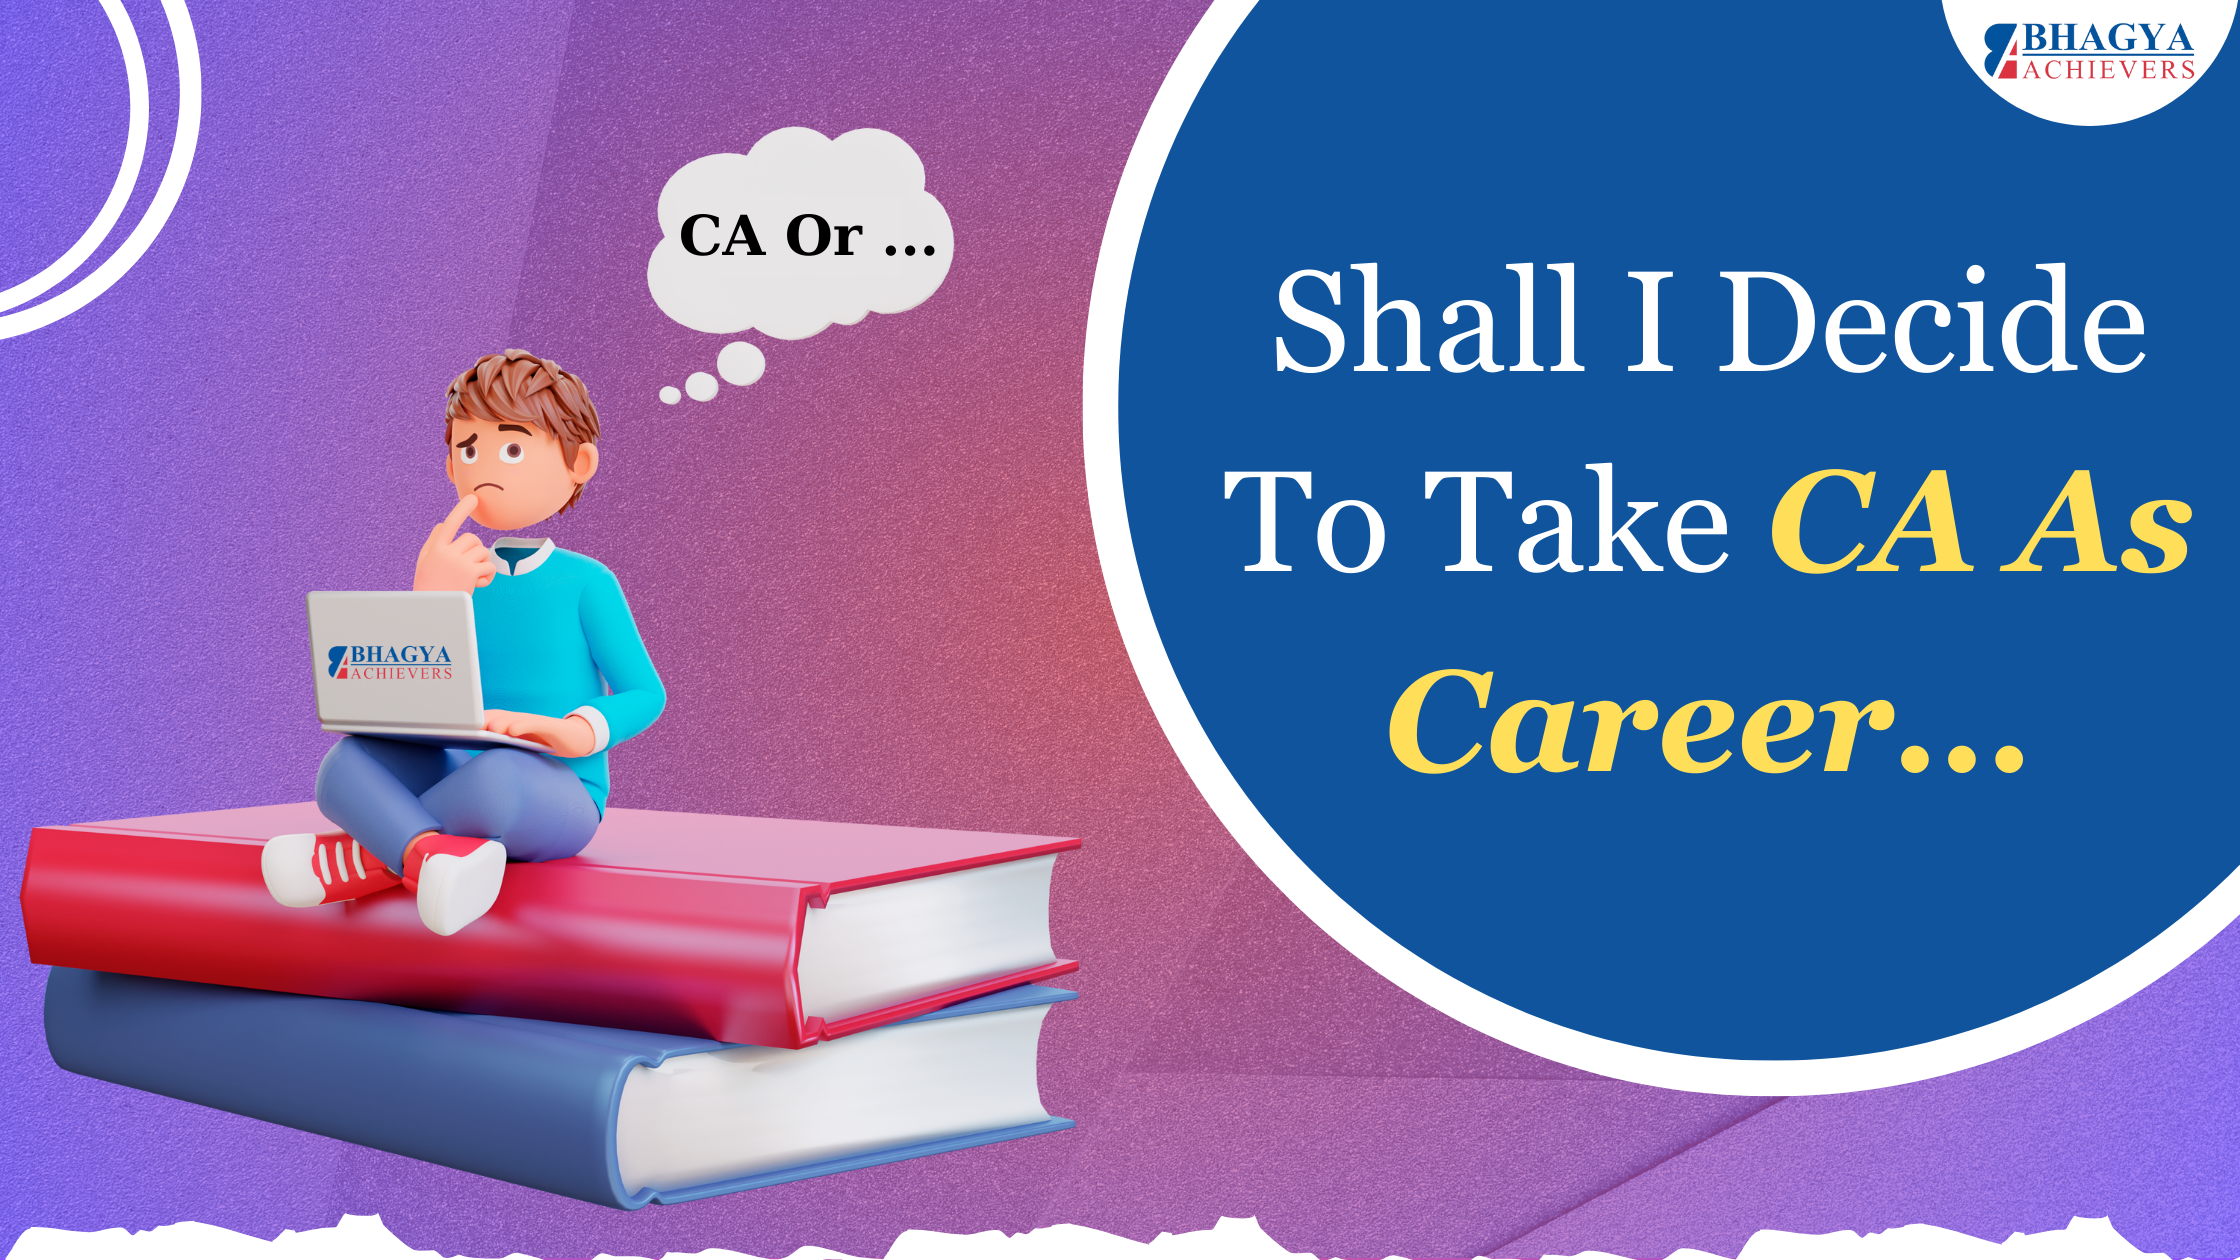 Shall I decide to take CA as a career - Bhagya Achievers